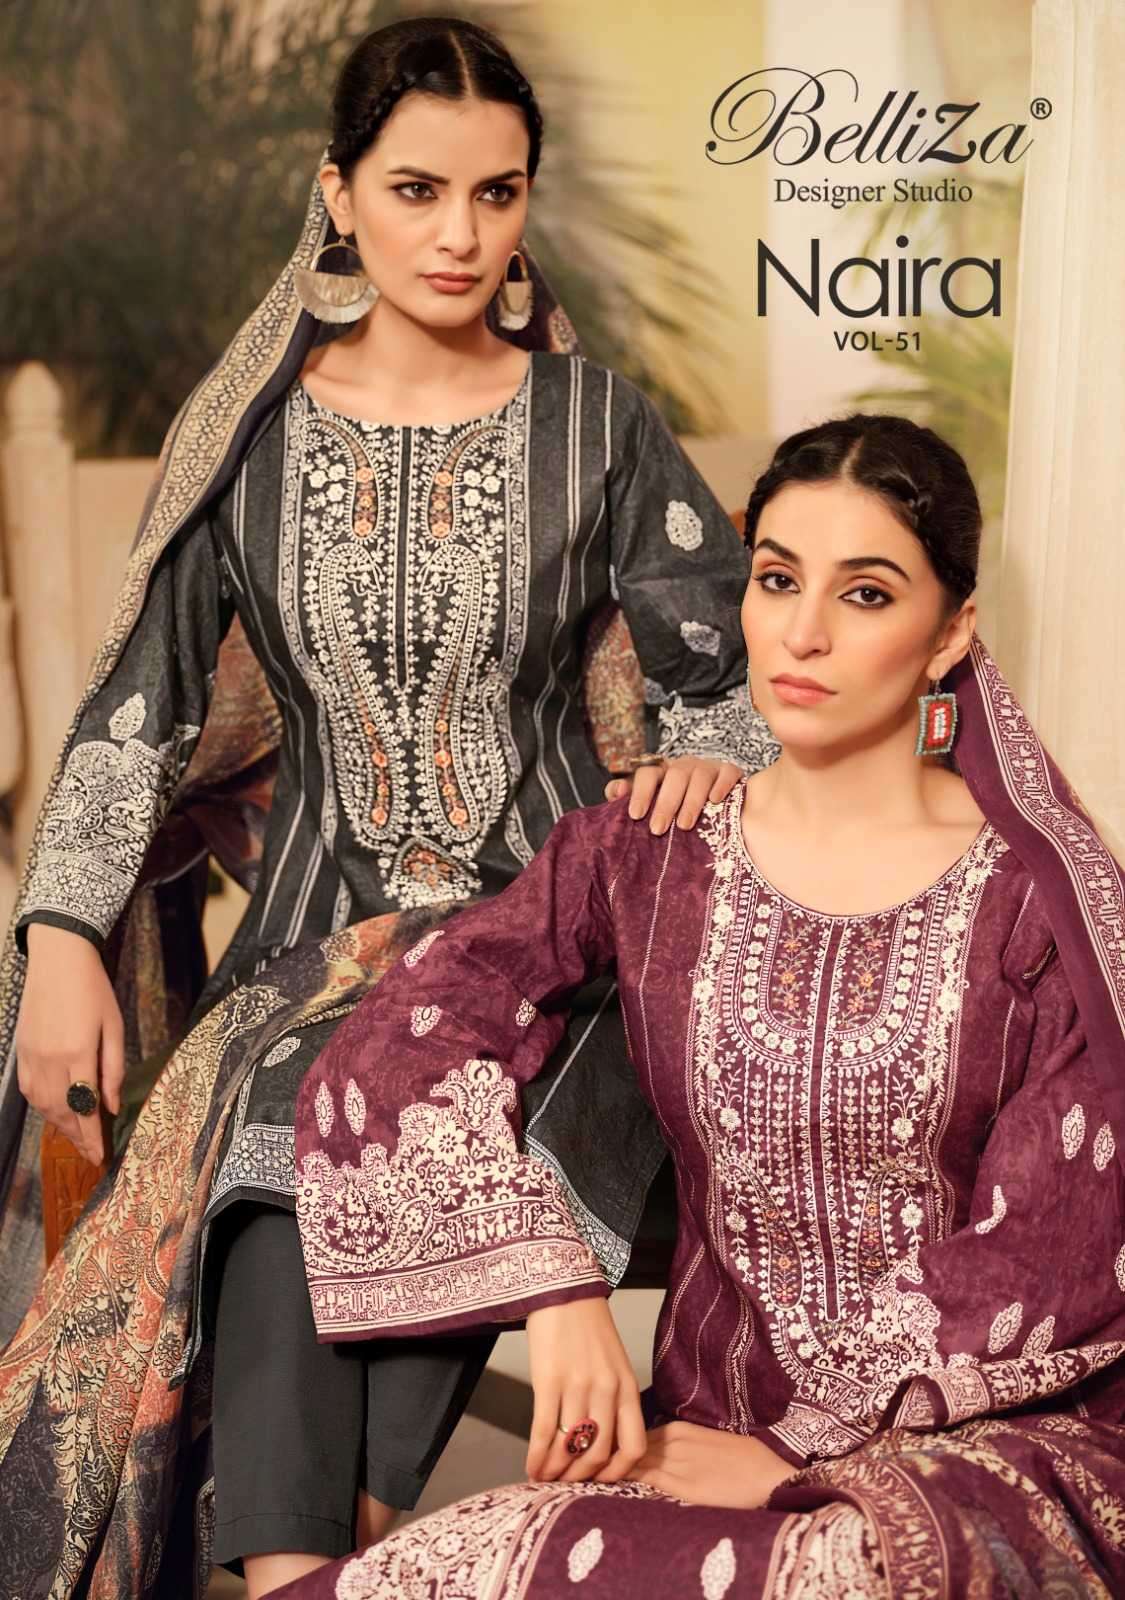 belliza naira vol 51 series 918001-918008 Pure Cotton Digital Prints suit